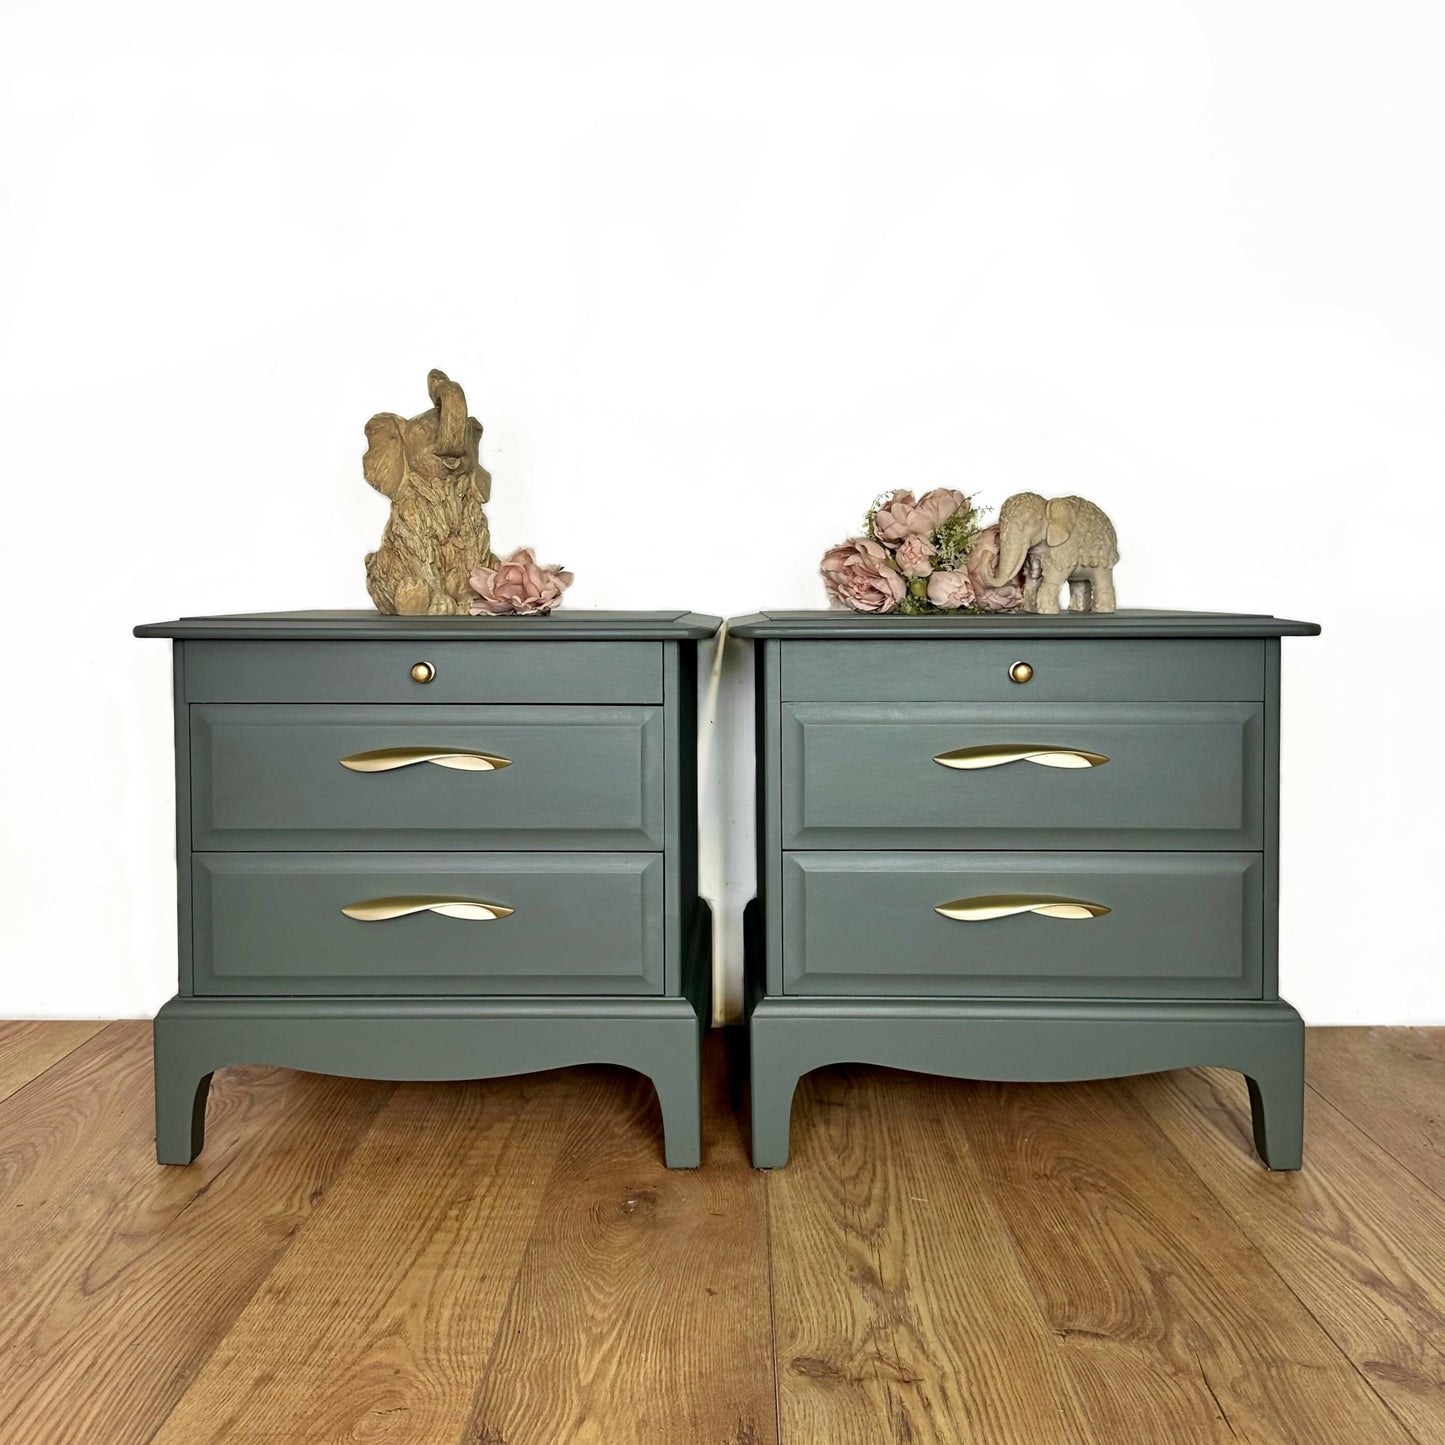 Refurbished Stag Minstrel bedside tables in olive green, vintage nightstands, upcycled, handprinted, drawers, dresser, chest, bedroom, pair